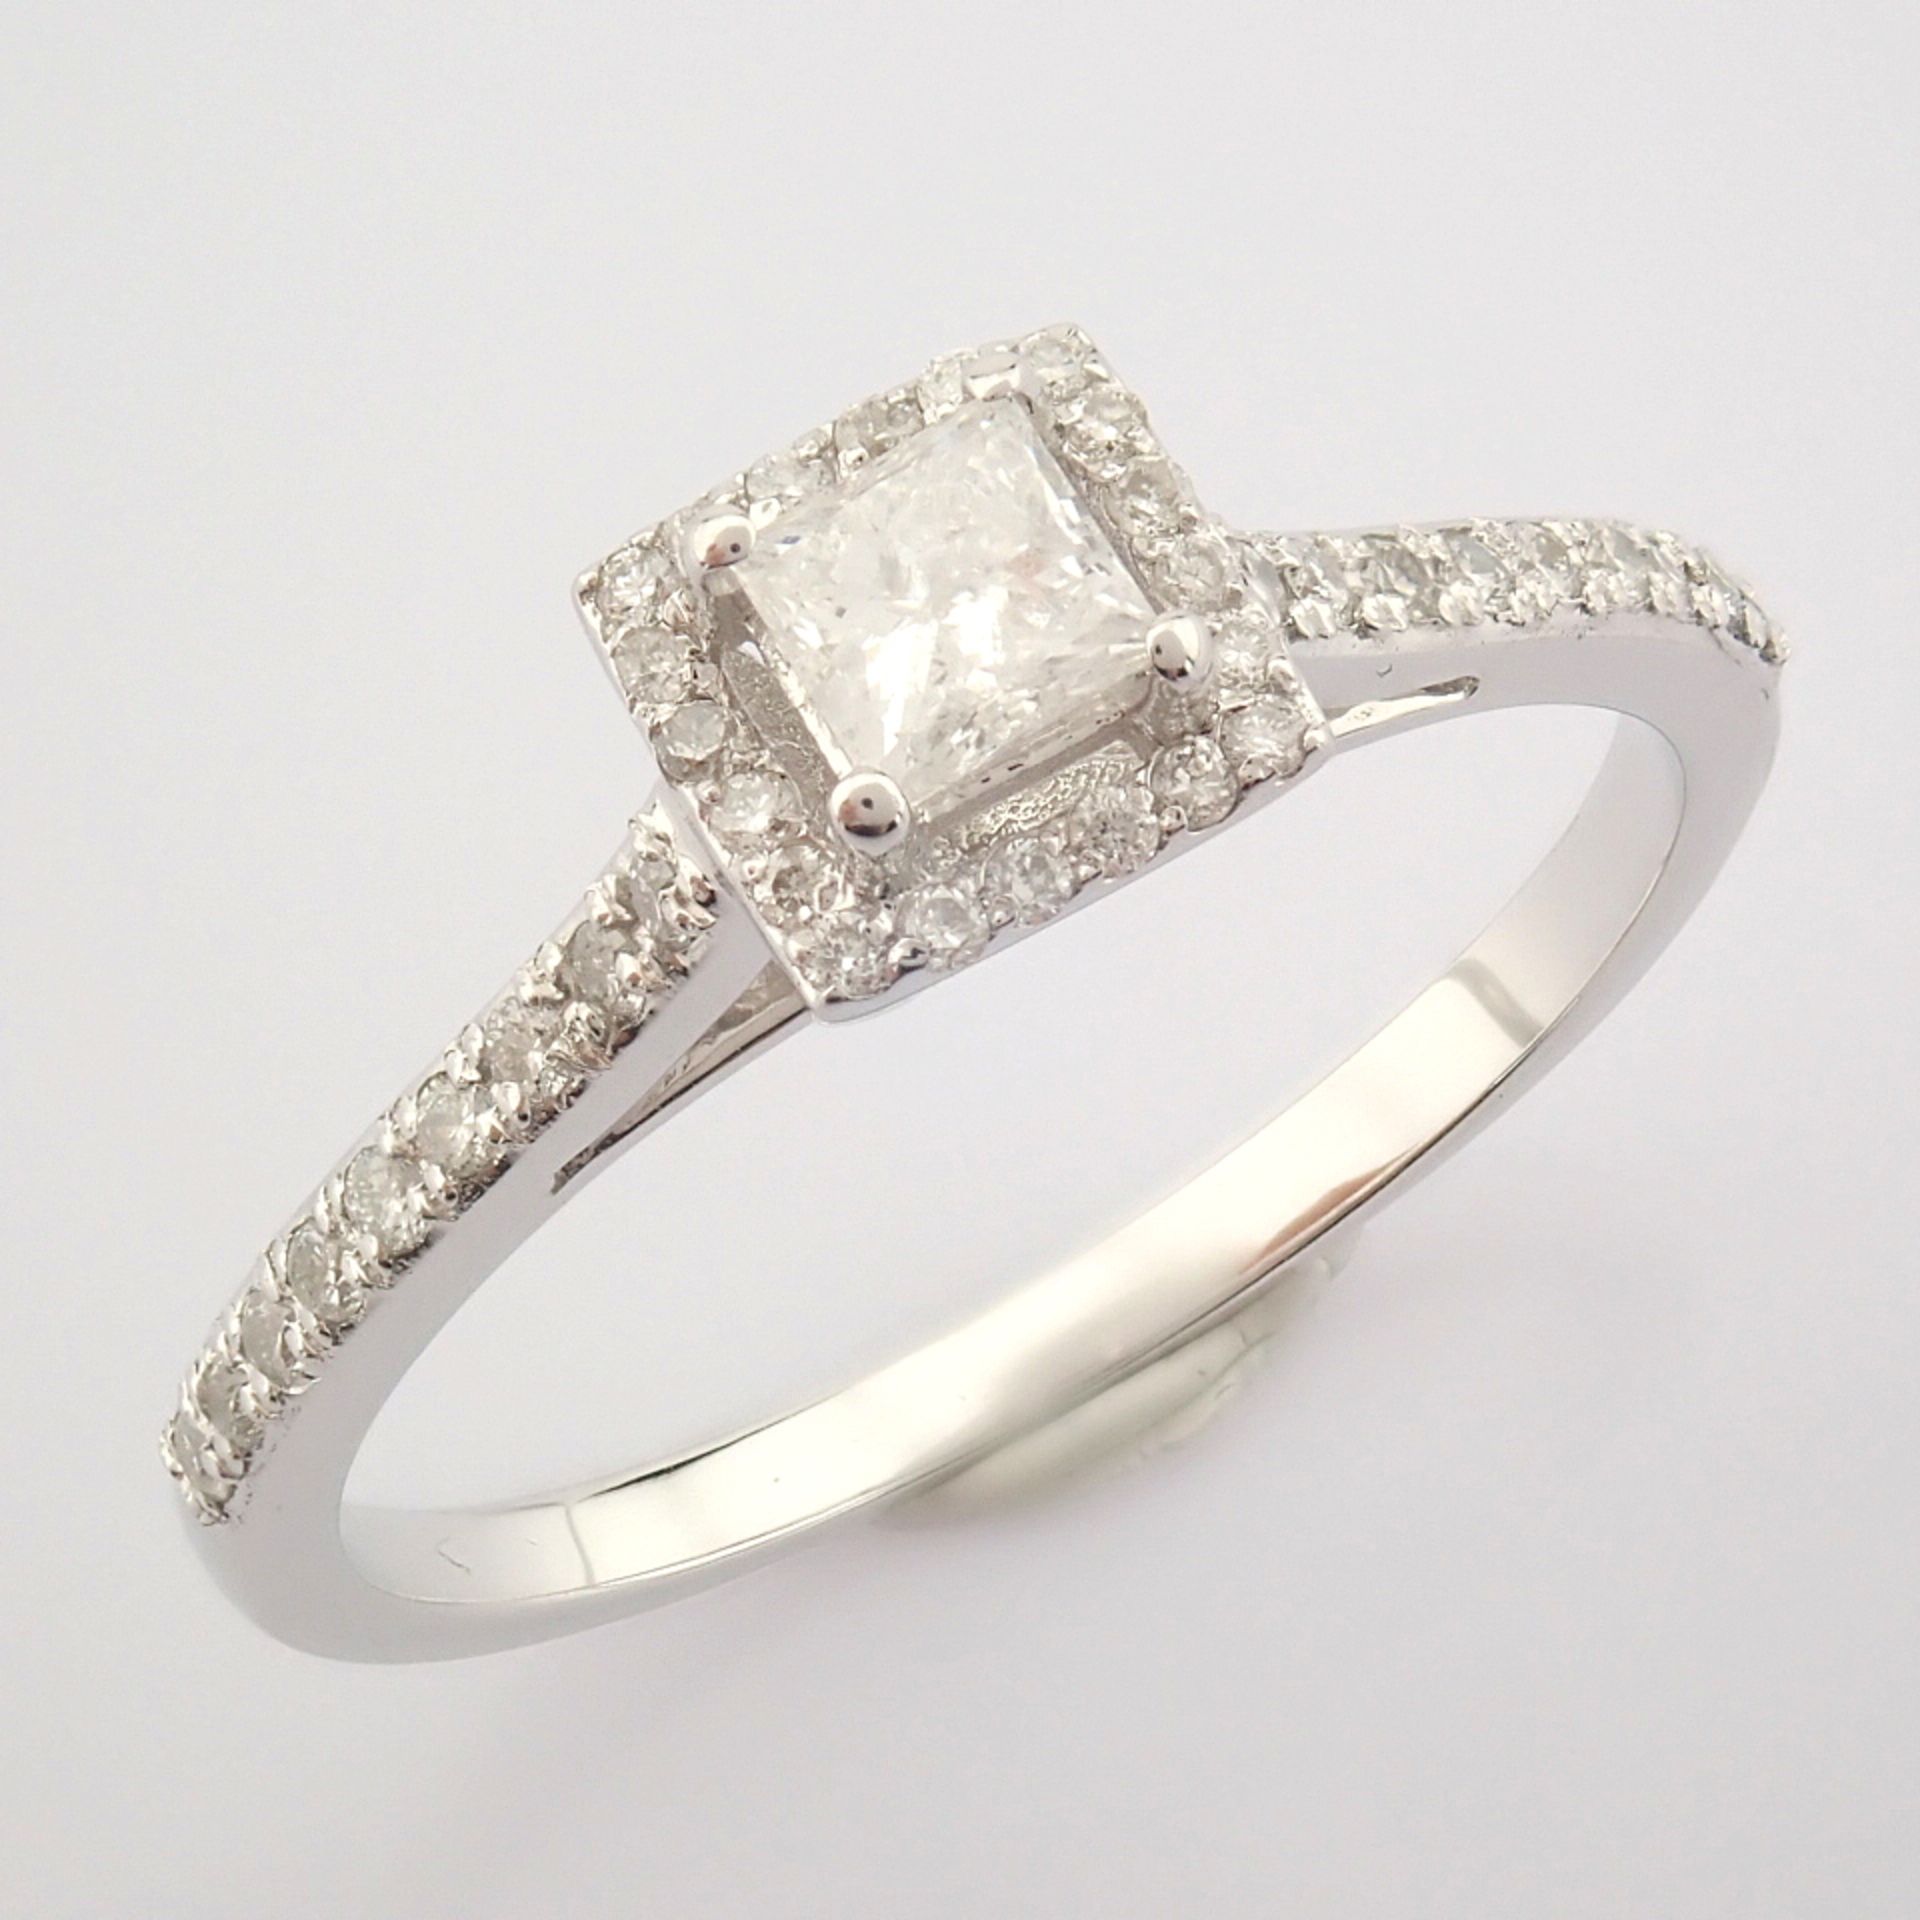 Certificated 14K White Gold Princess Cut Diamond & Diamond Ring (Total 0.37 ct Stone) - Image 3 of 10